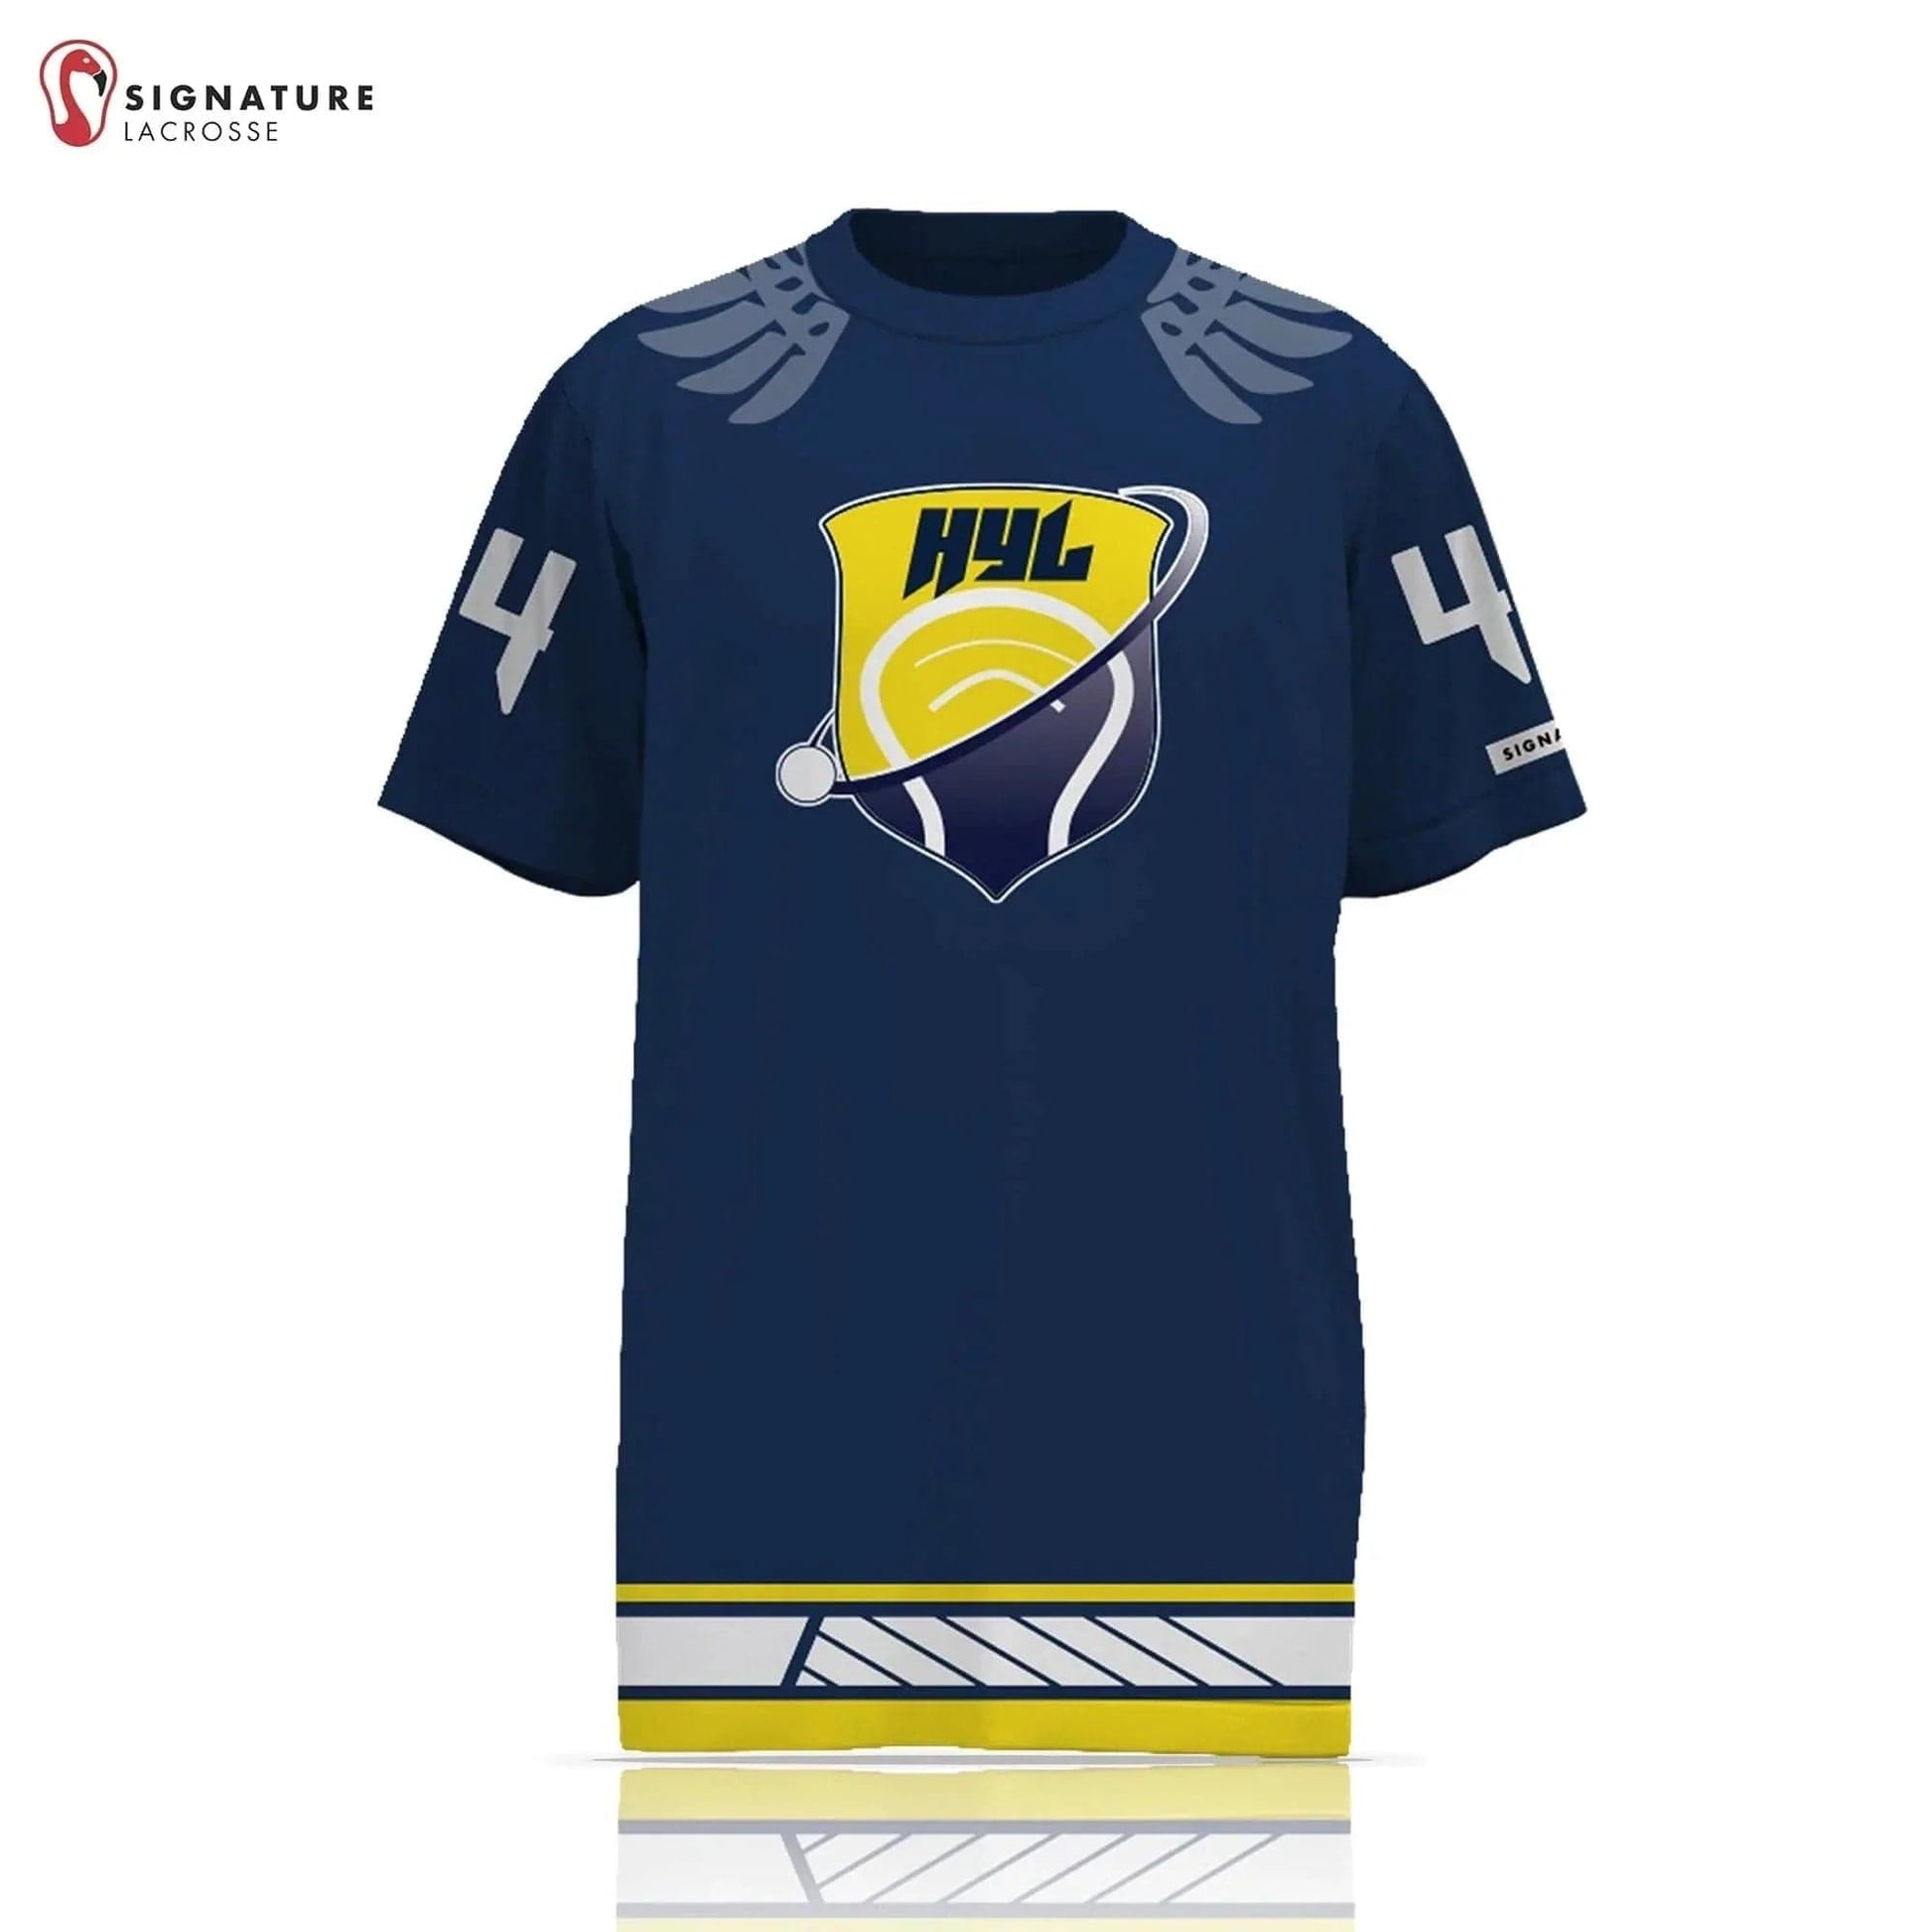 Hudsonville Area Lacrosse Player Short Sleeve Shooting Shirt: 2036 Signature Lacrosse